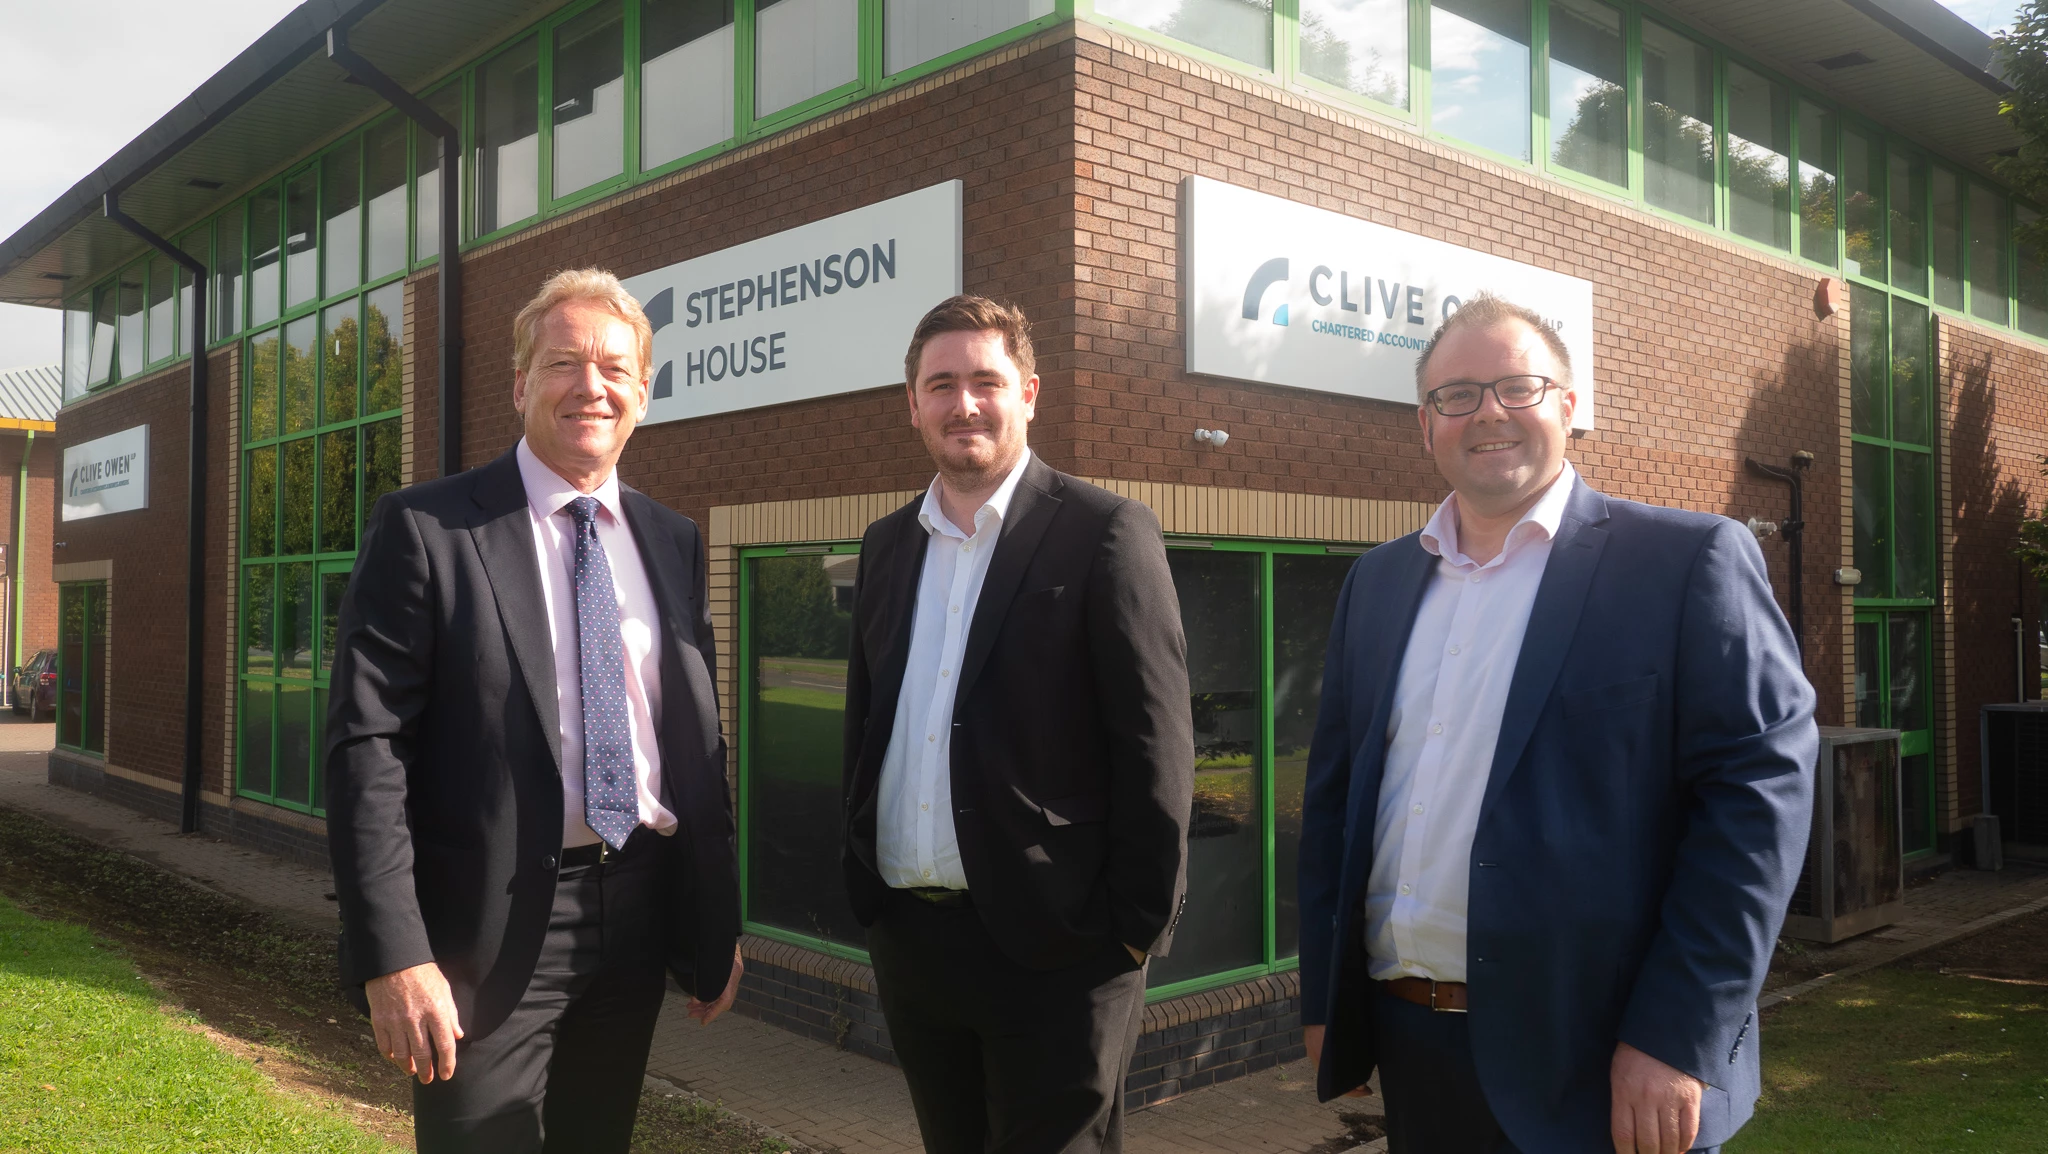 Gary Ellis, managing partner at Clive Owen LLP, Middlesbrough Mayor Chris Cooke and Lee Watson, tax partner at Clive Owen LLP.